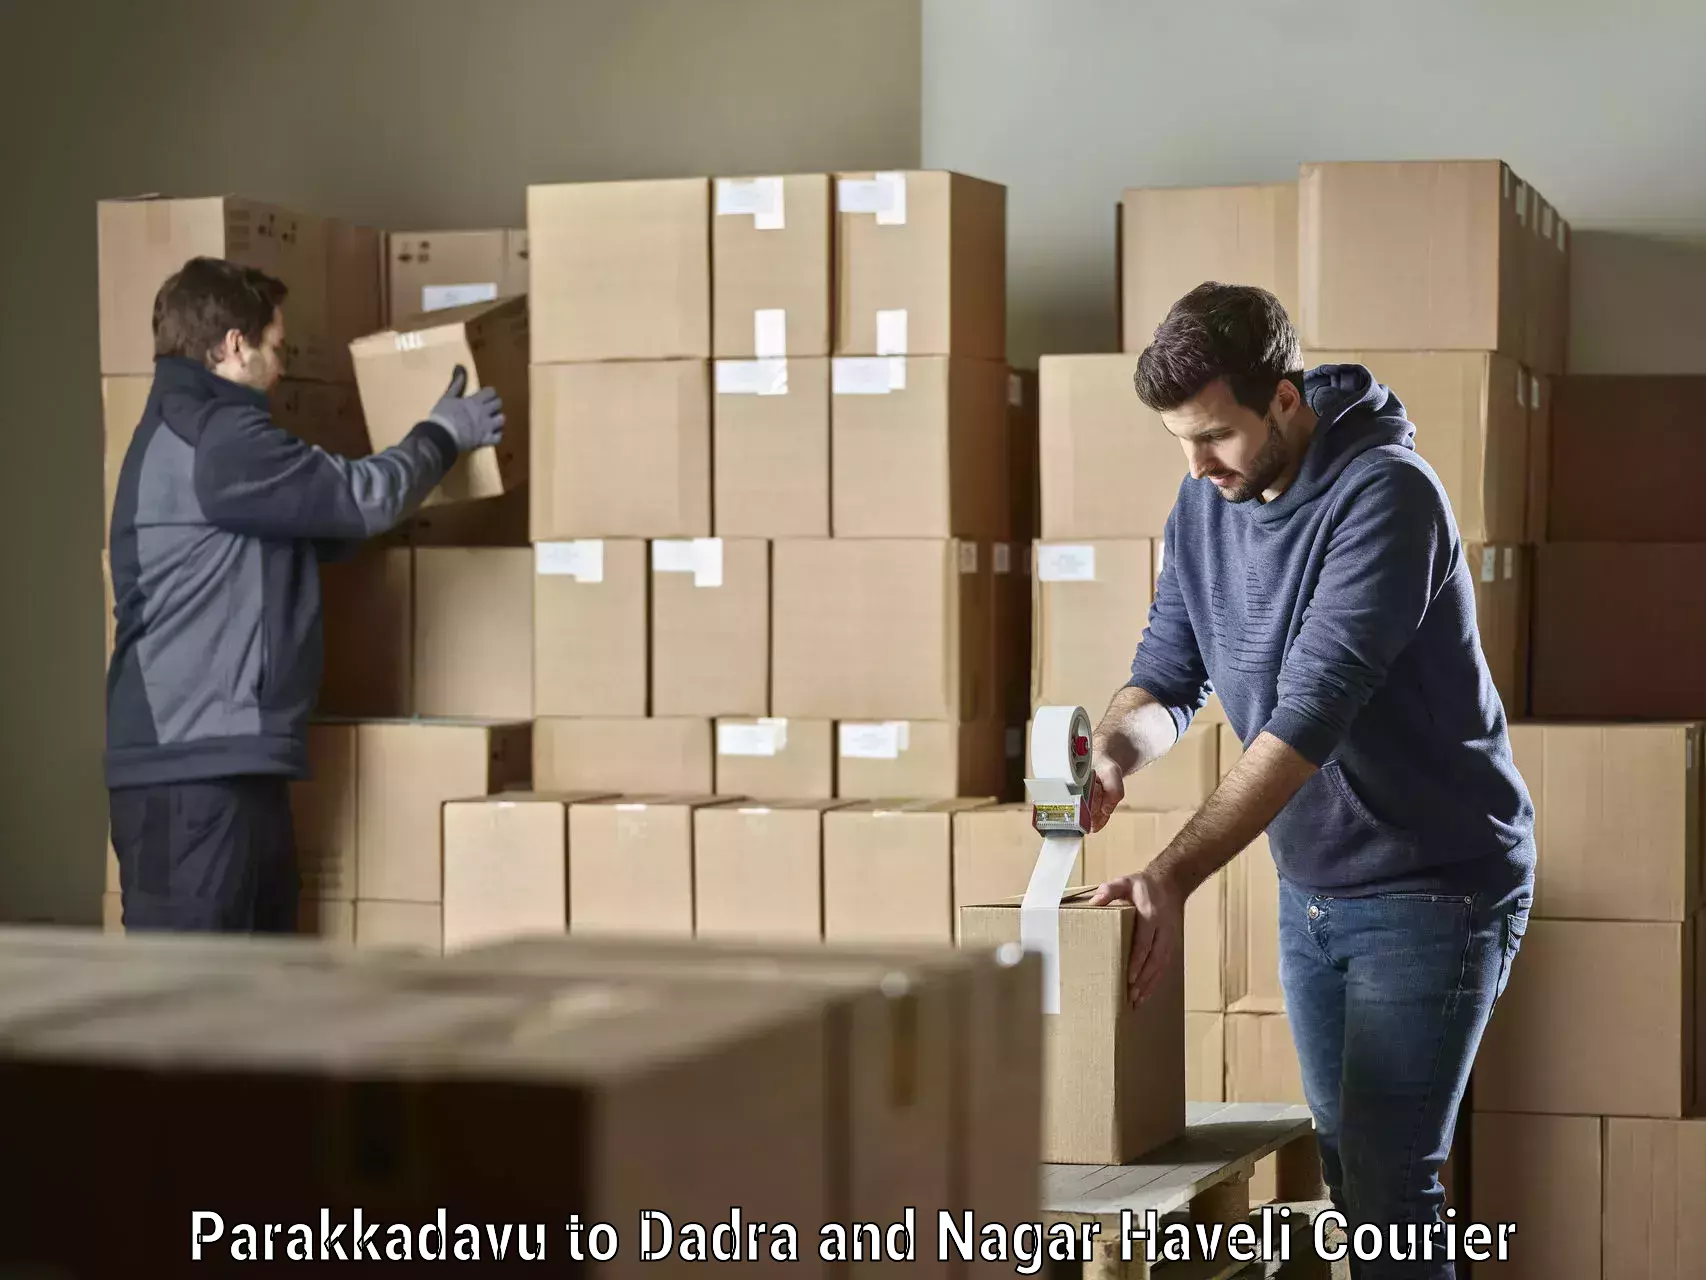 Package delivery network Parakkadavu to Silvassa